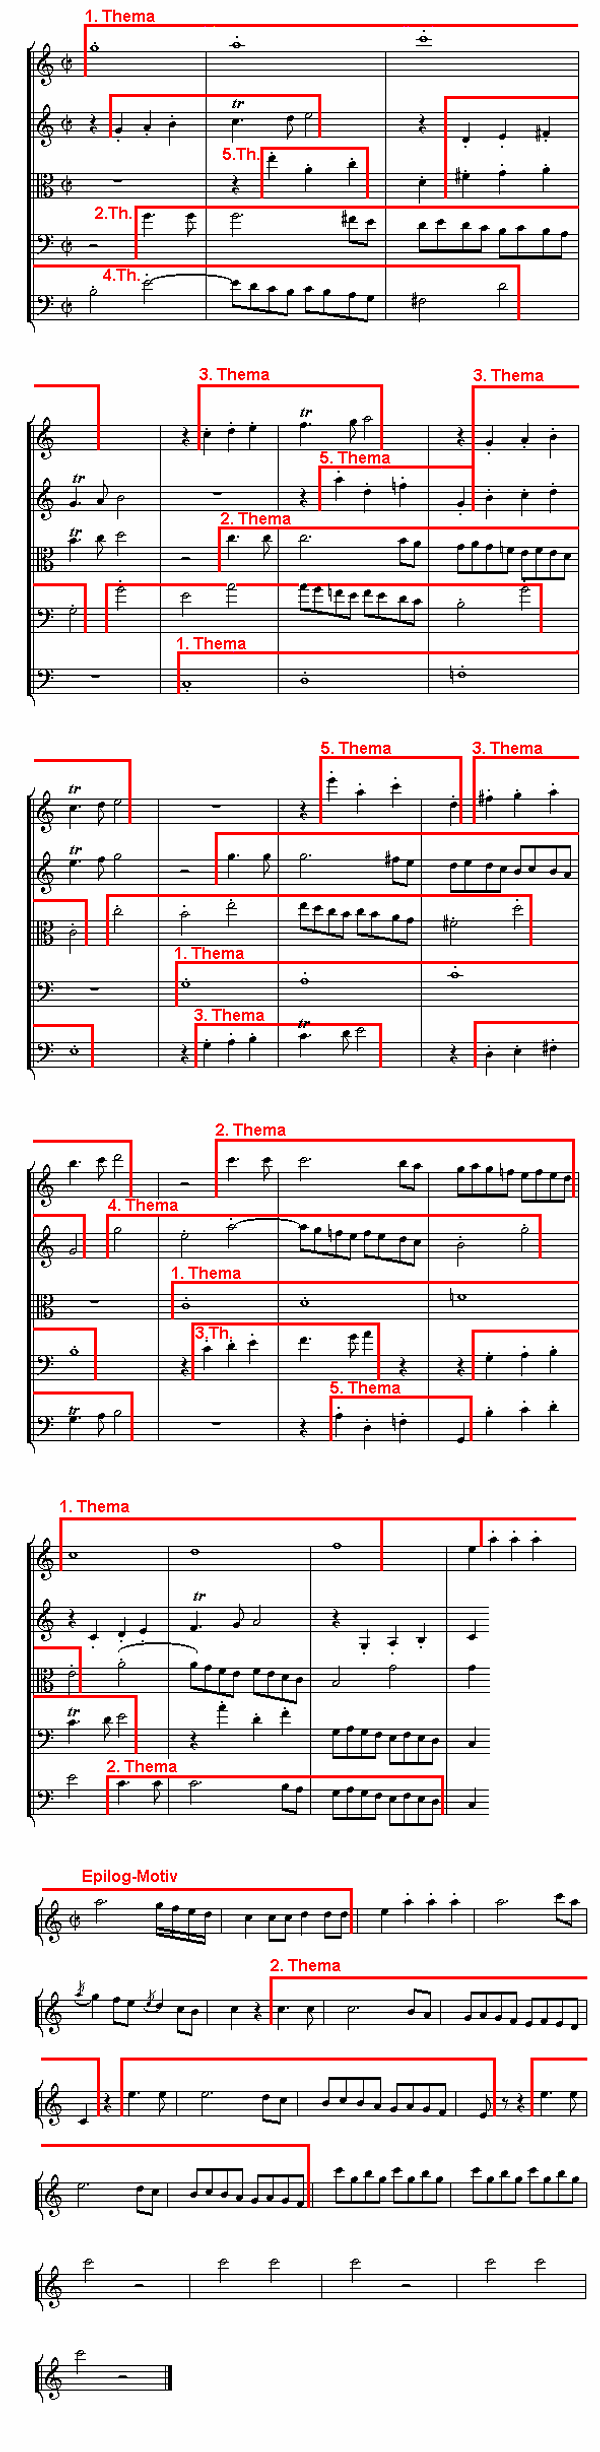 Notenbild: Jupiter-Symphonie: 4. Satz, Takte 385-424